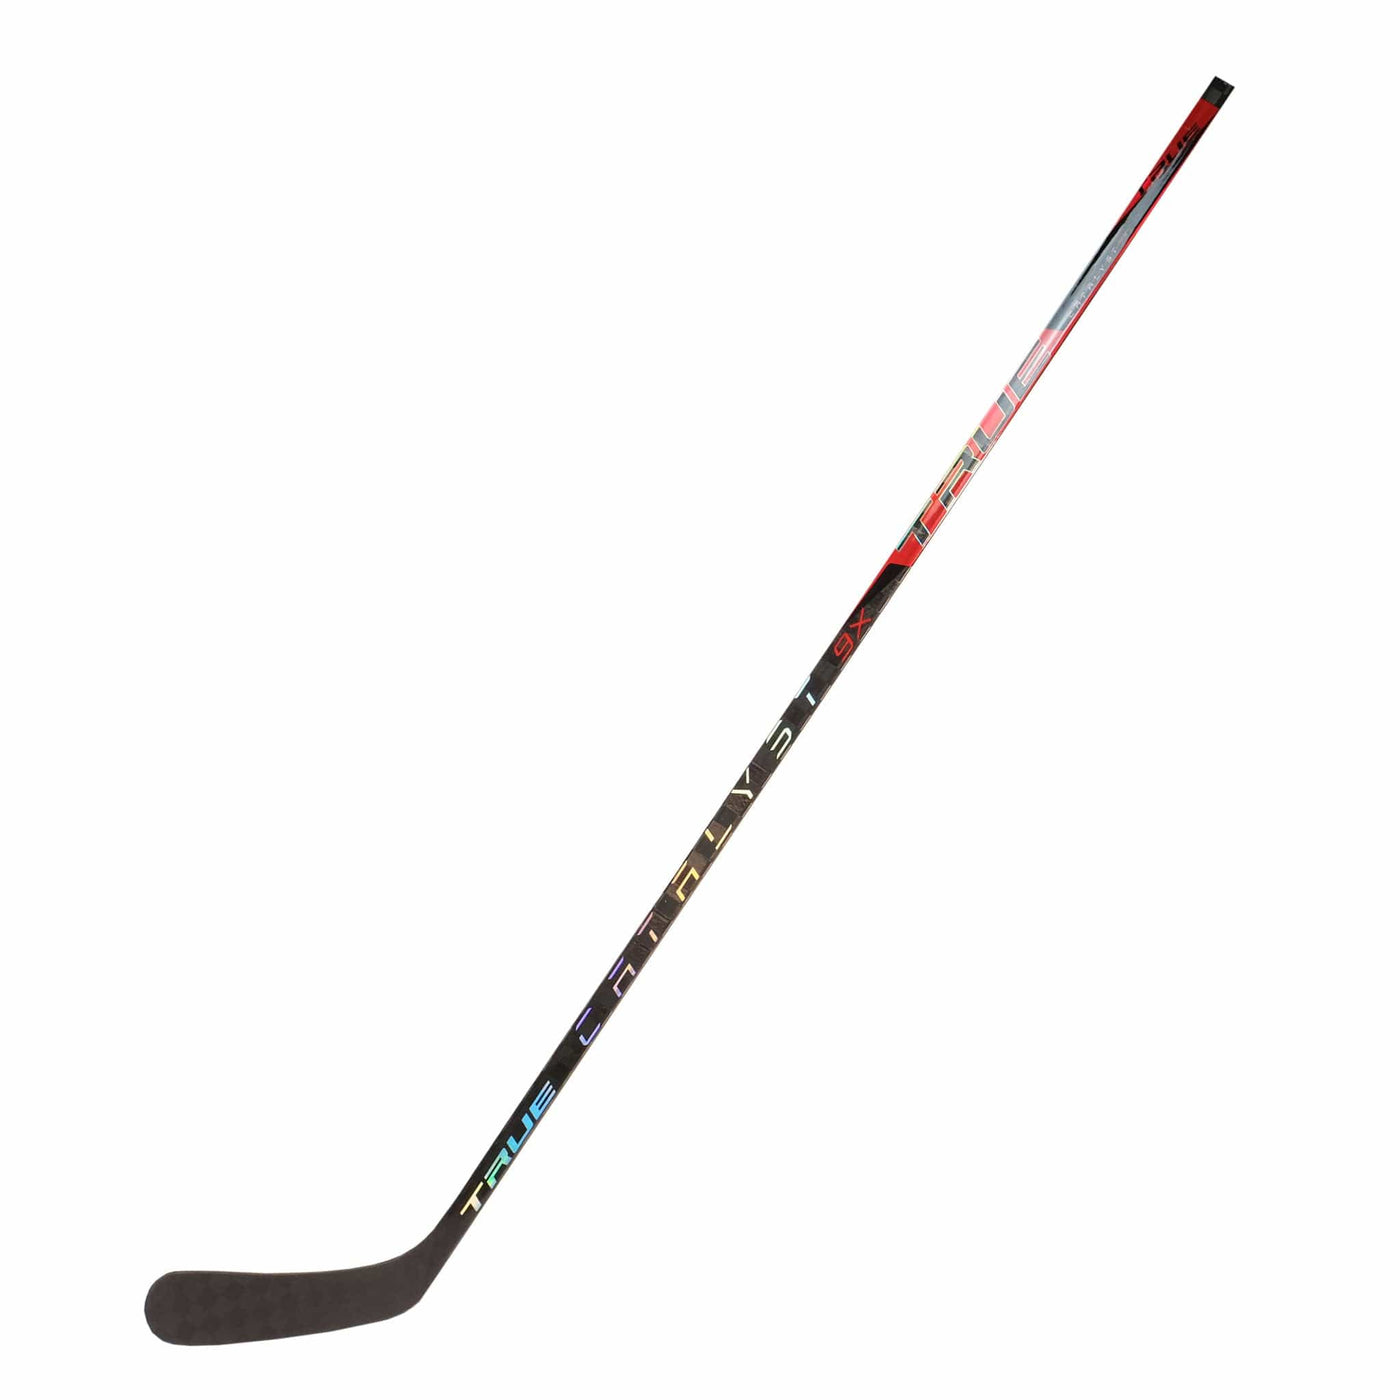 TRUE Catalyst 9X Pro Stock Senior Hockey Stick - Josh Leivo - TC2 - R-80 - The Hockey Shop Source For Sports